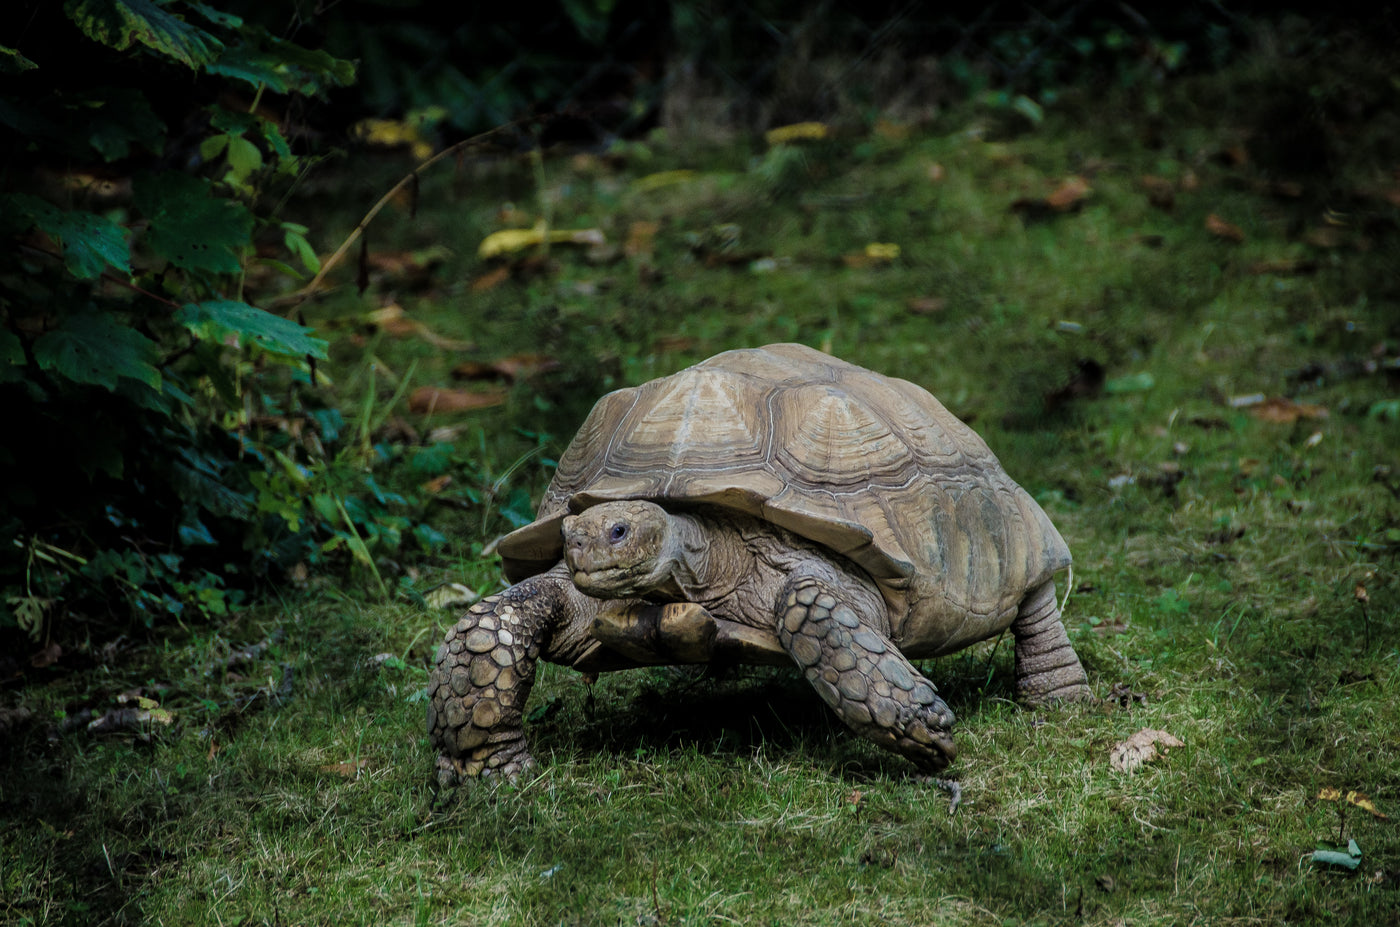 Tales of Tortoise Golf: Surviving the Slowpokes Ahead